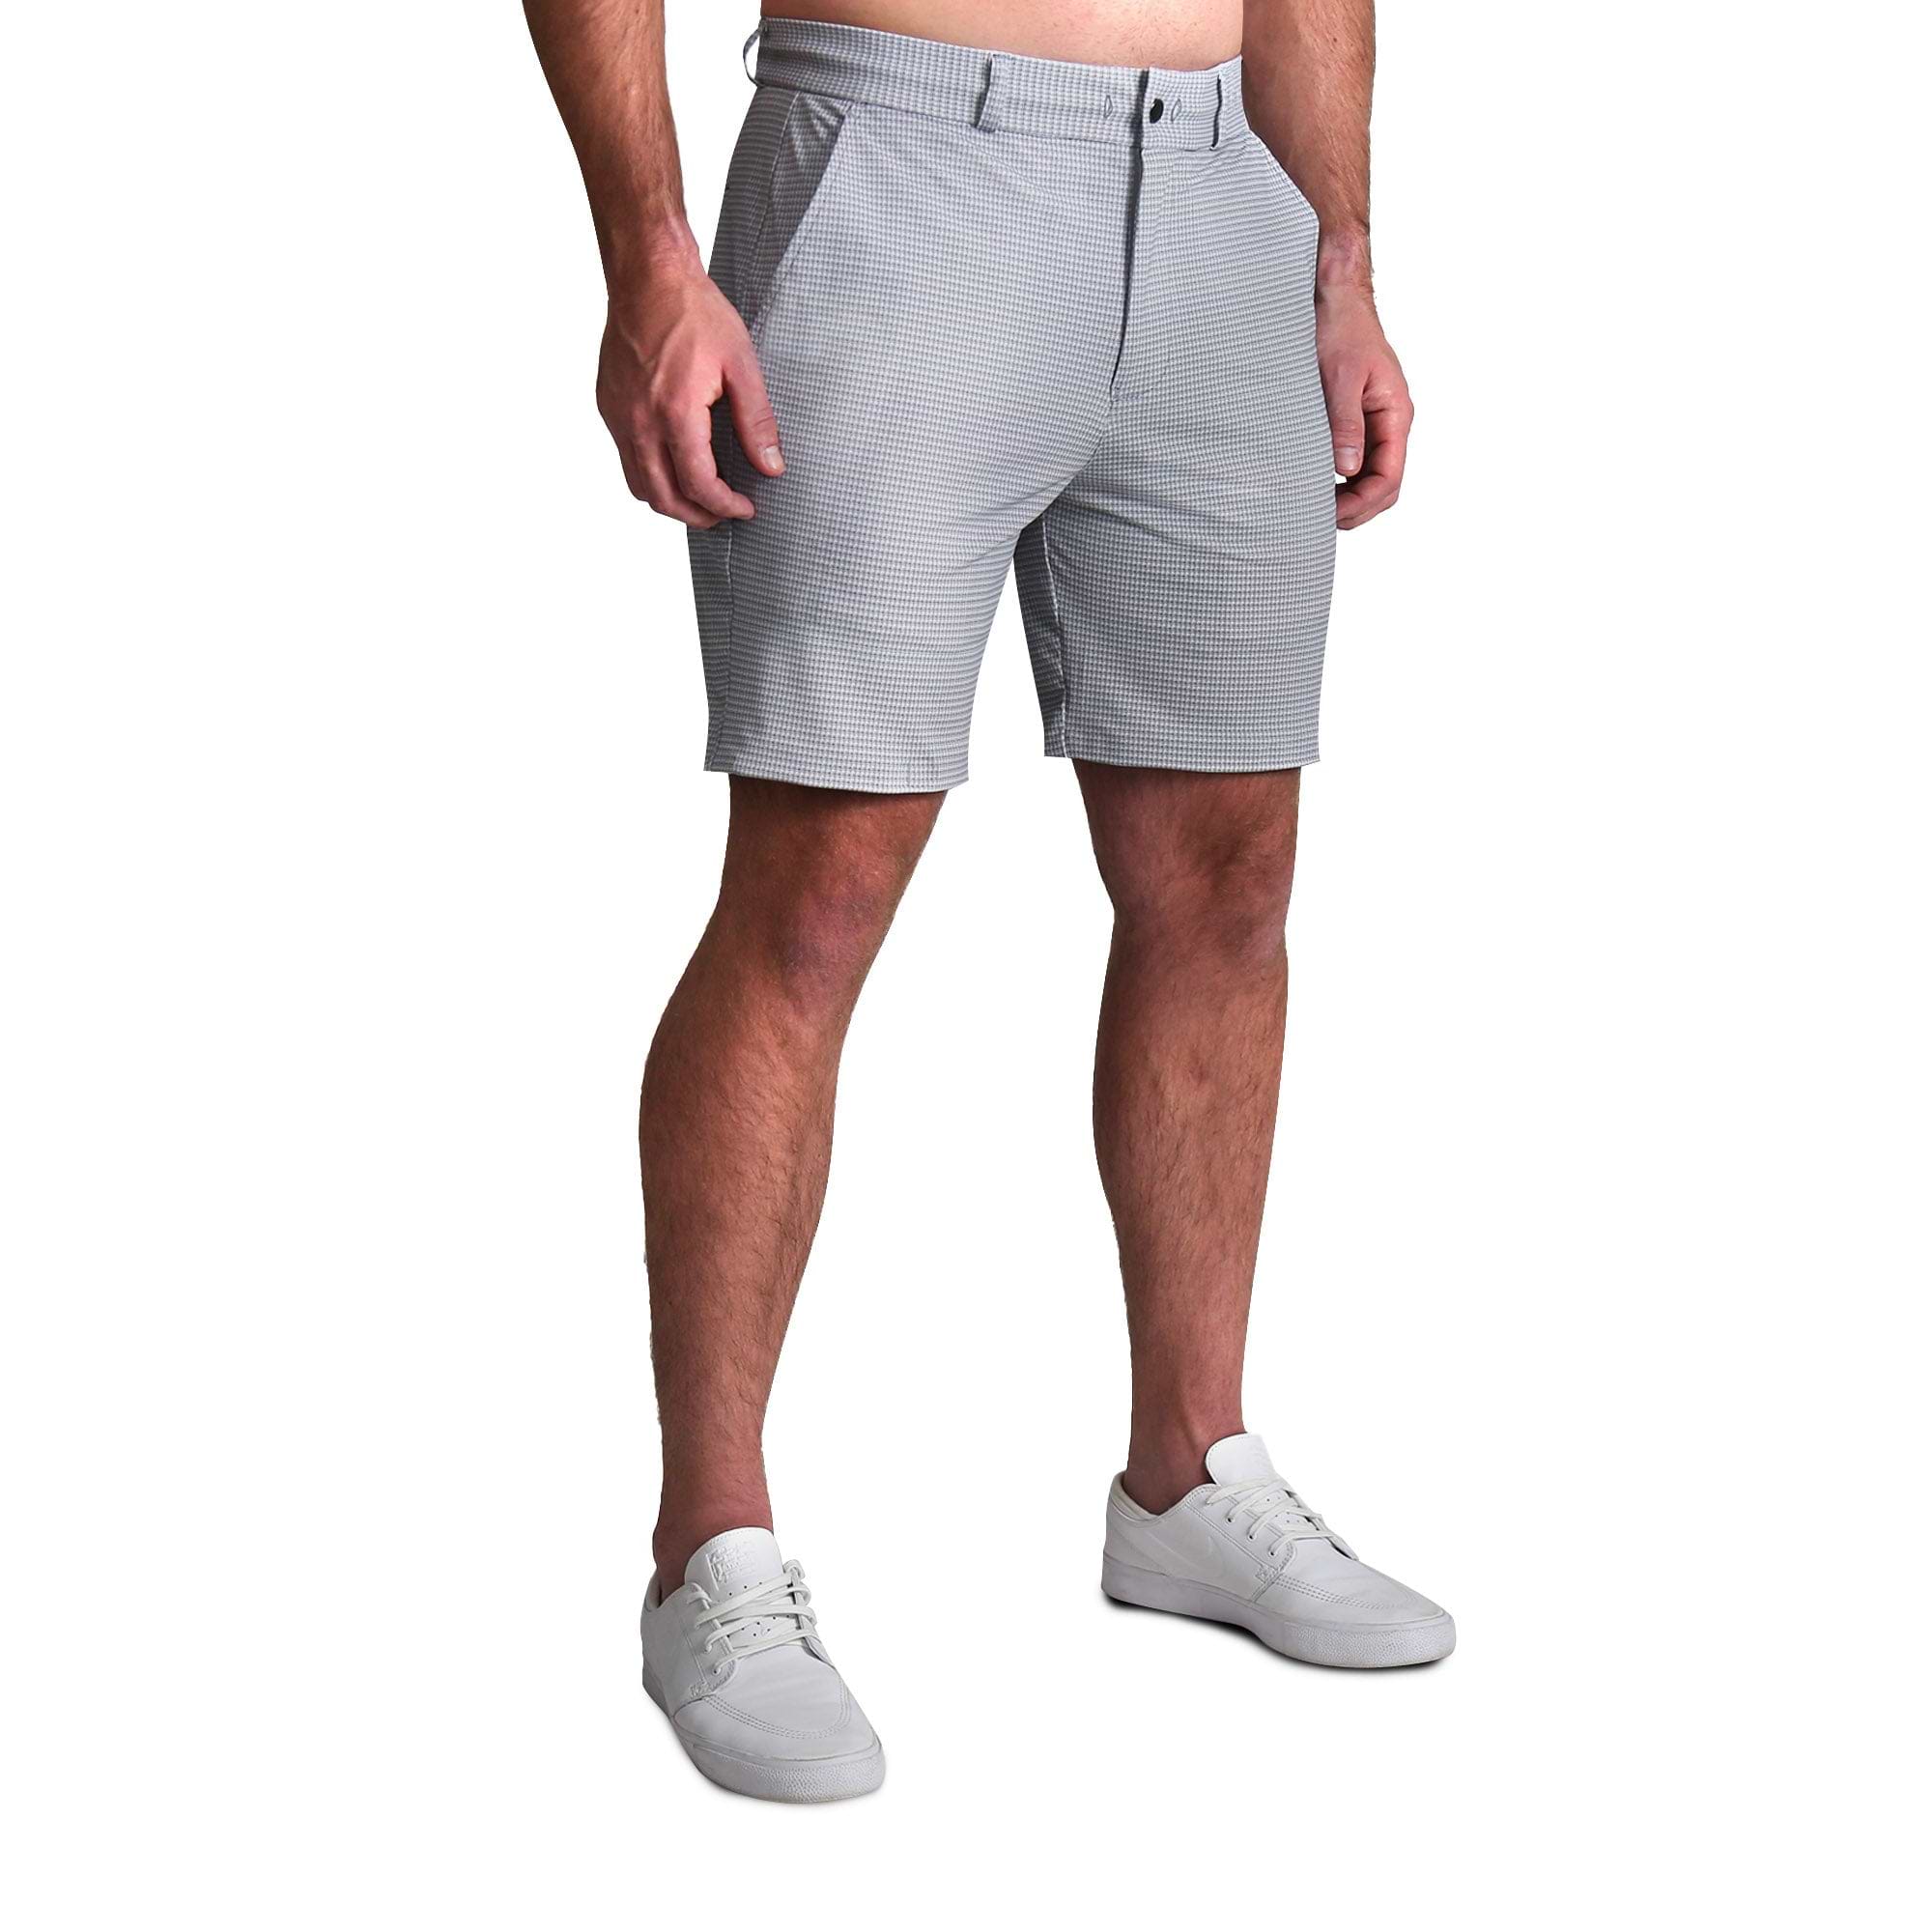 Athletic Fit Drawstring Shorts - Grey Houndstooth